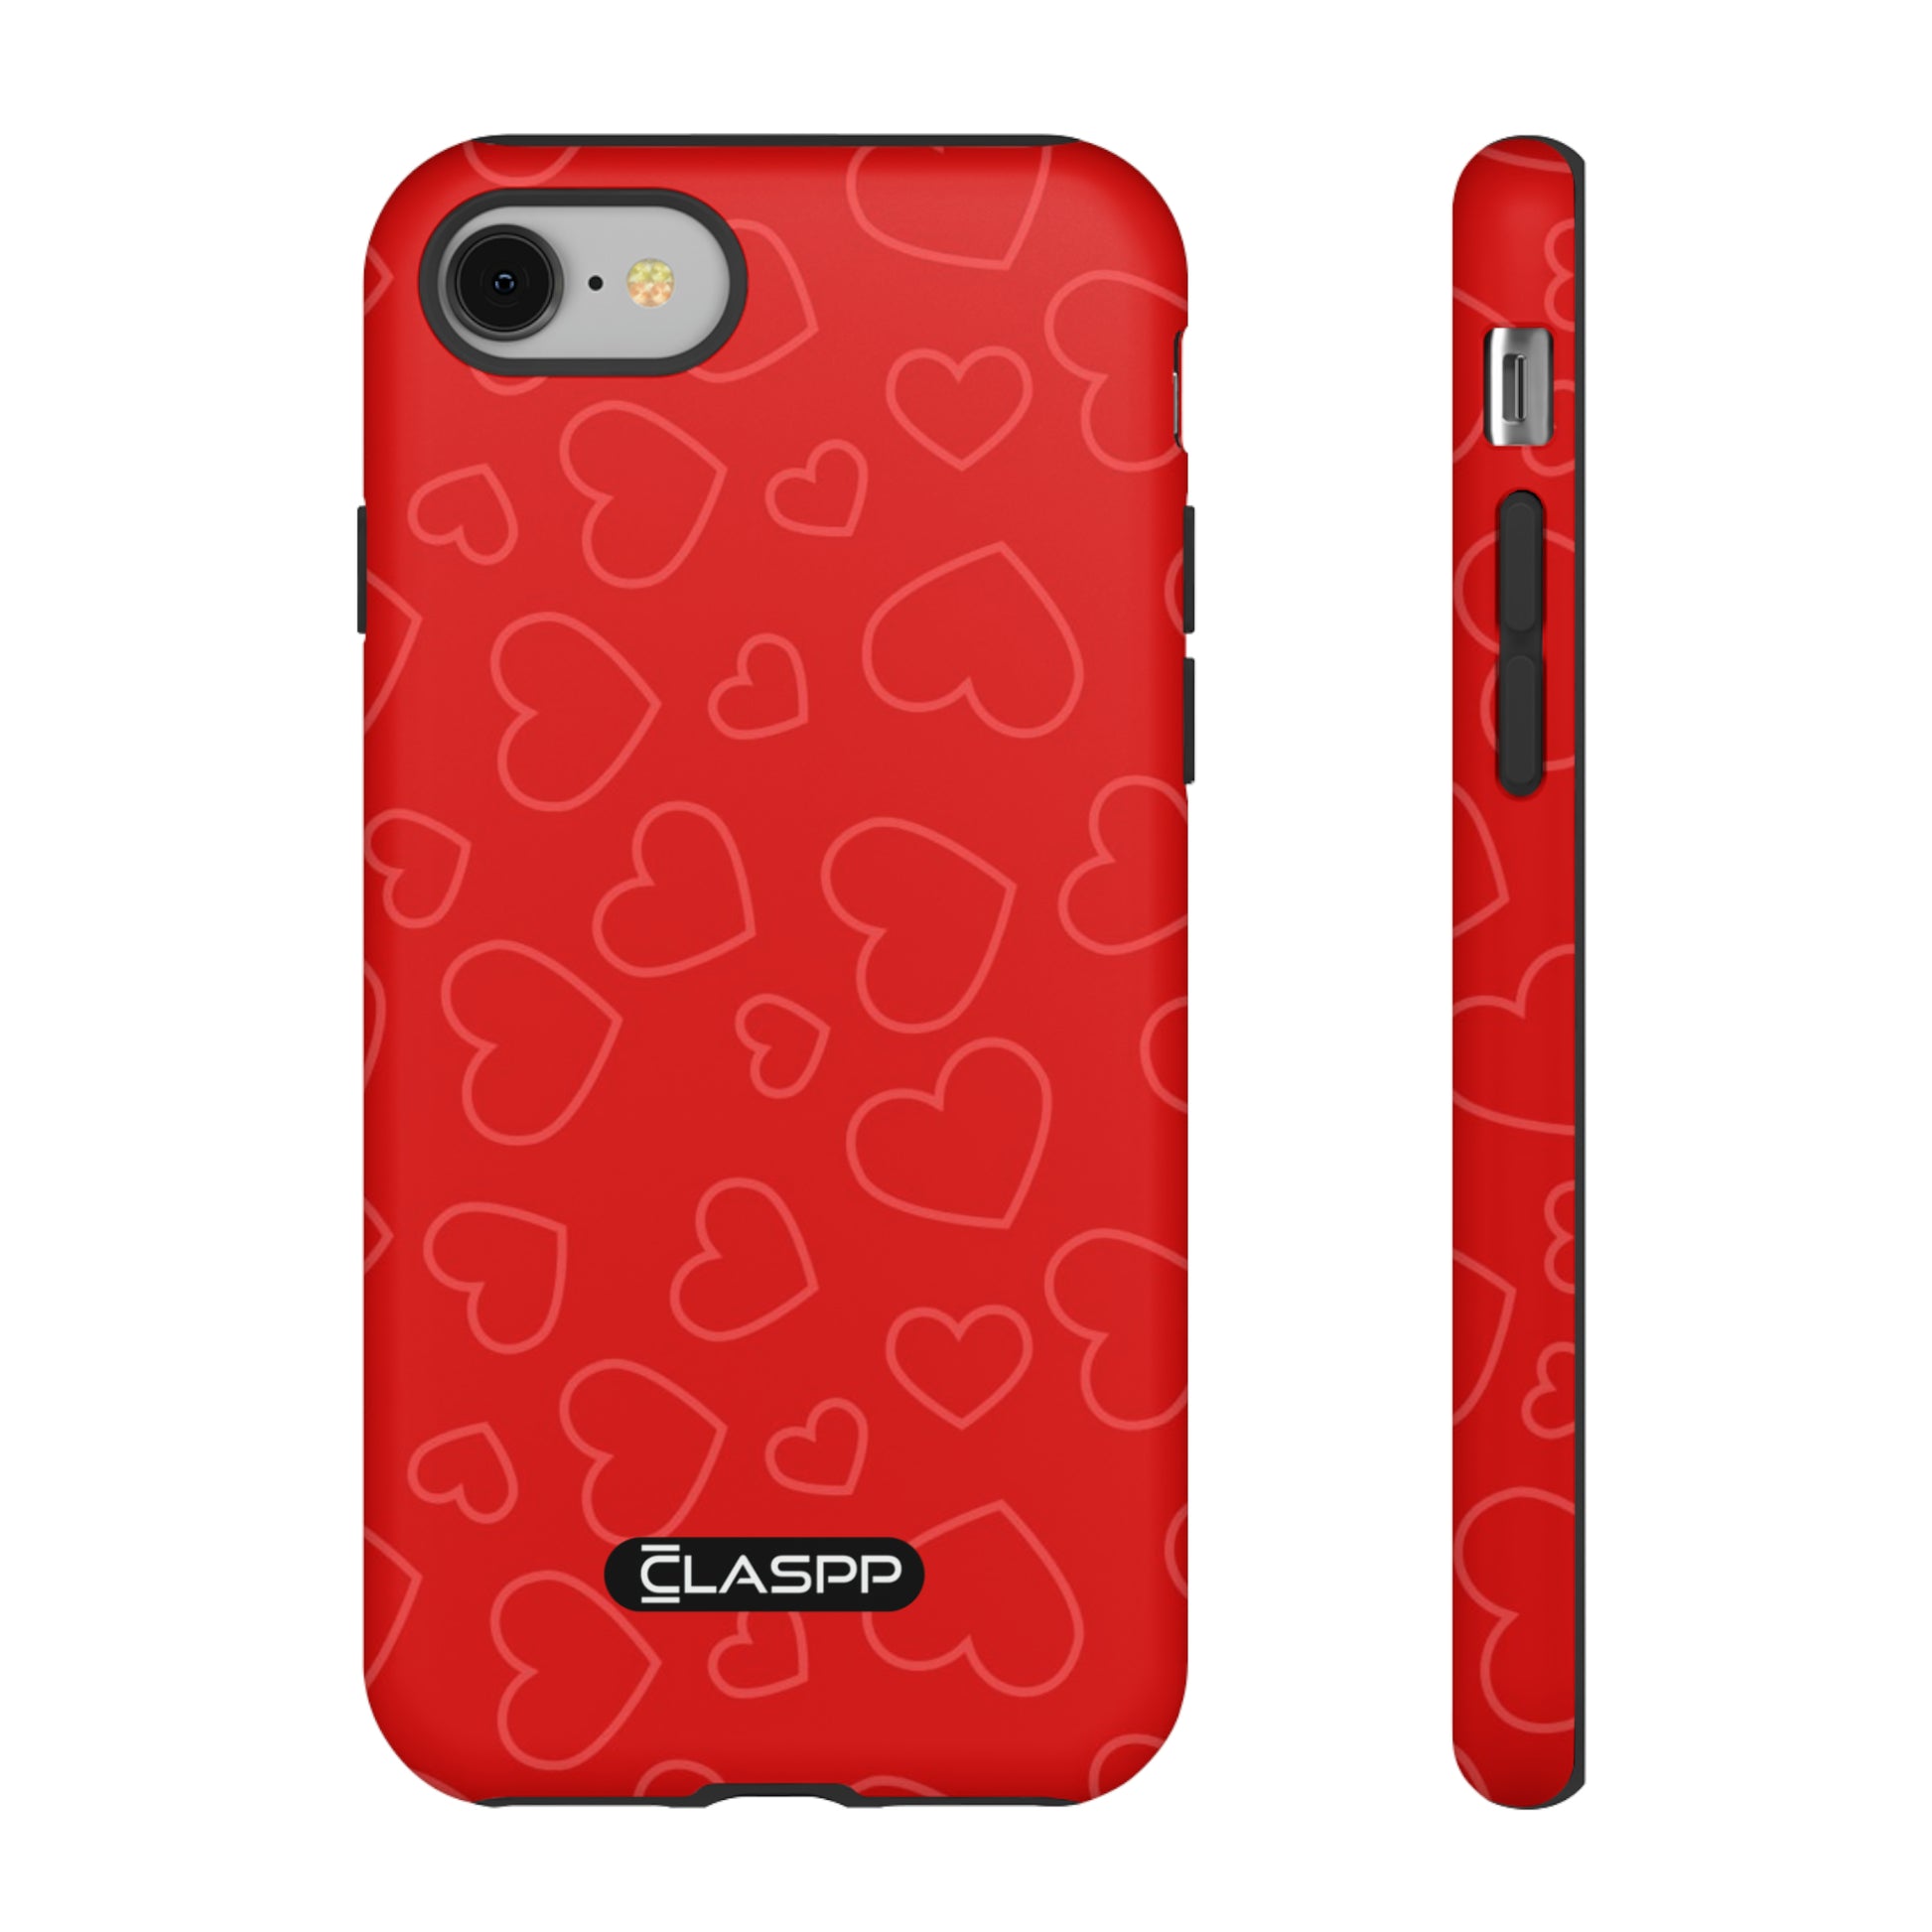 Iphone 8 Valentine's Day phone case